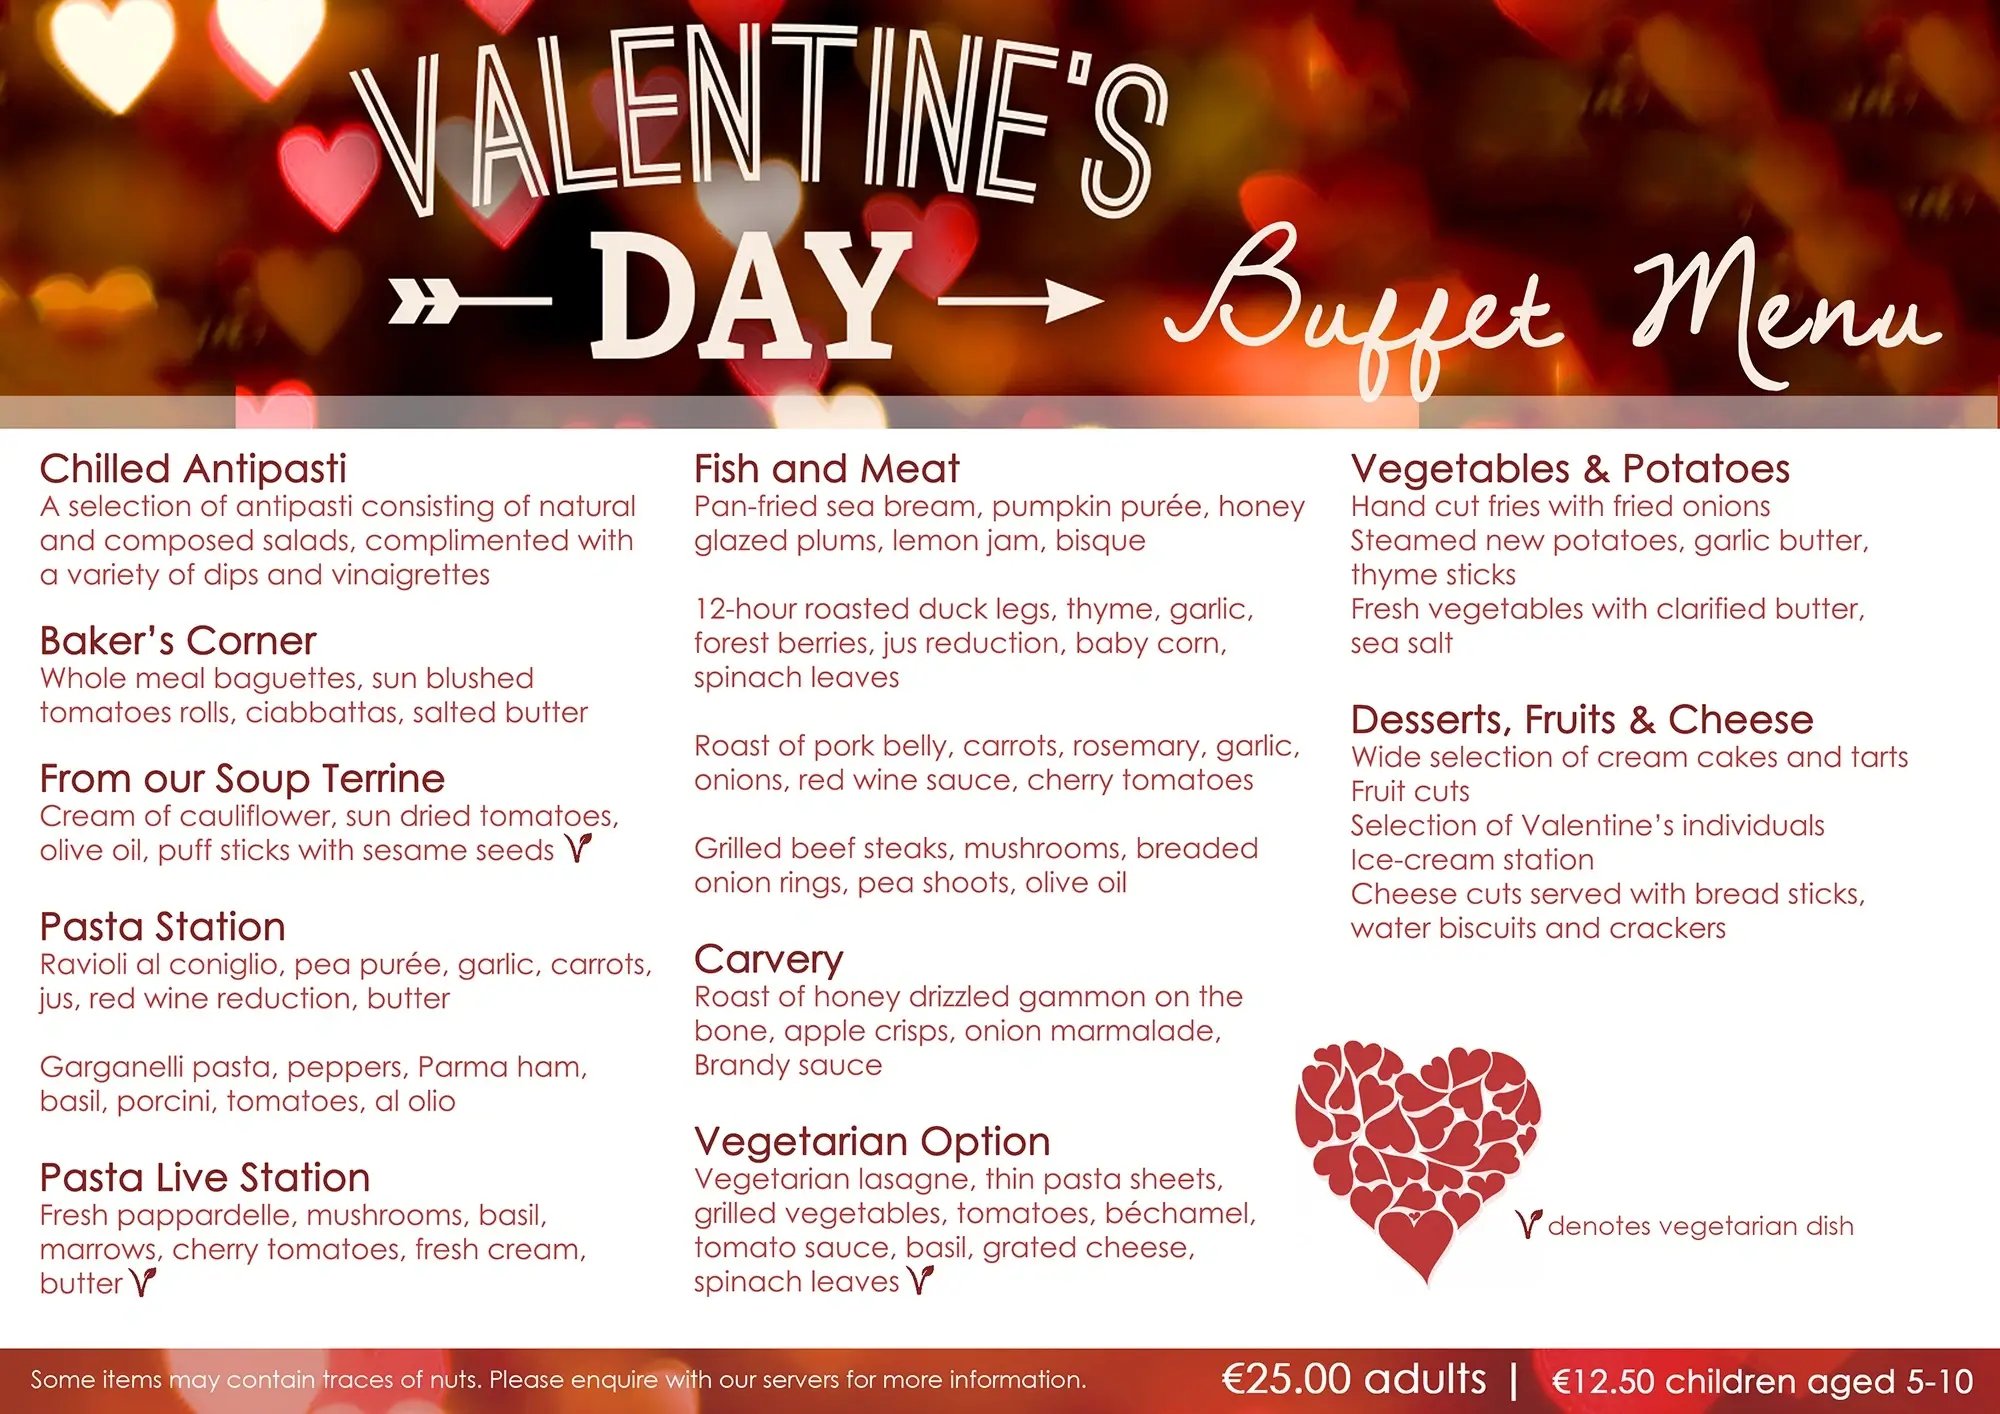 Valentine's day special menu